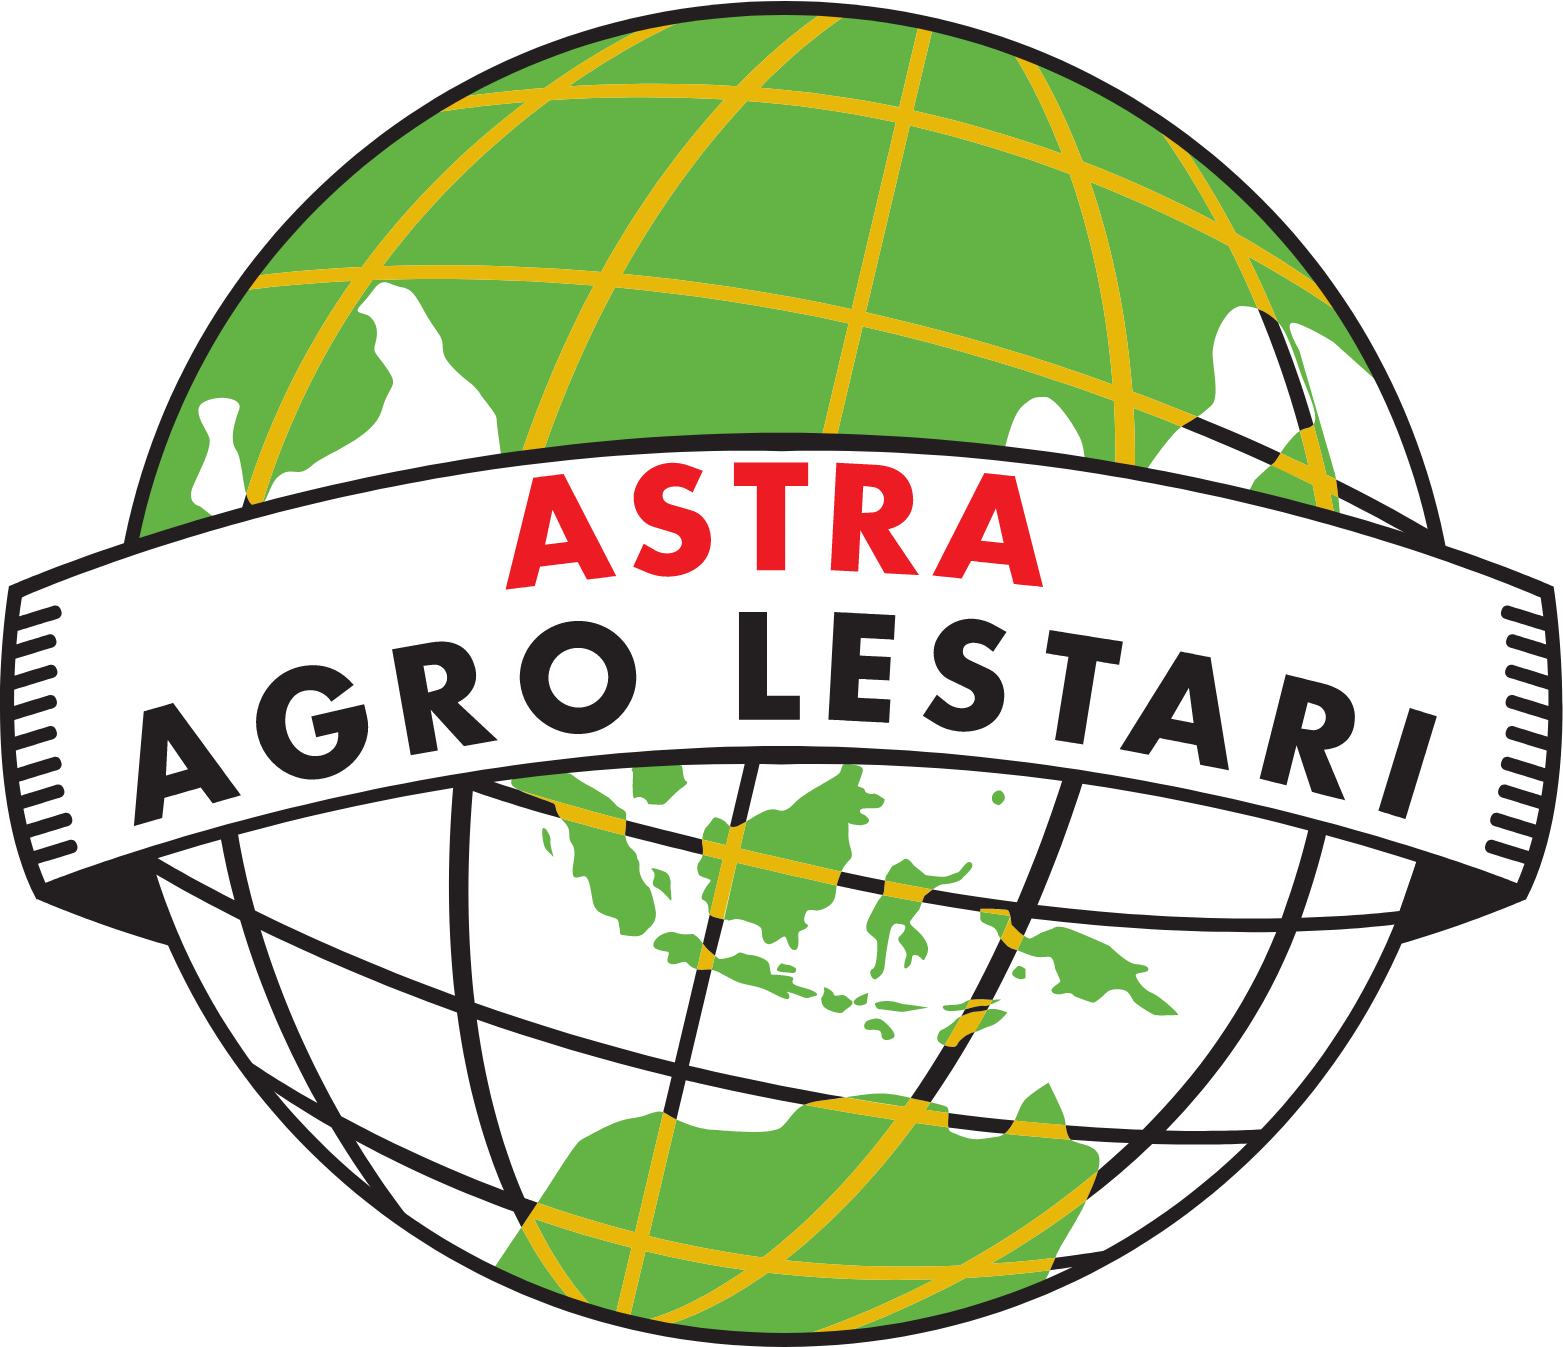 Astra Agro Lestari logo (PNG transparent)